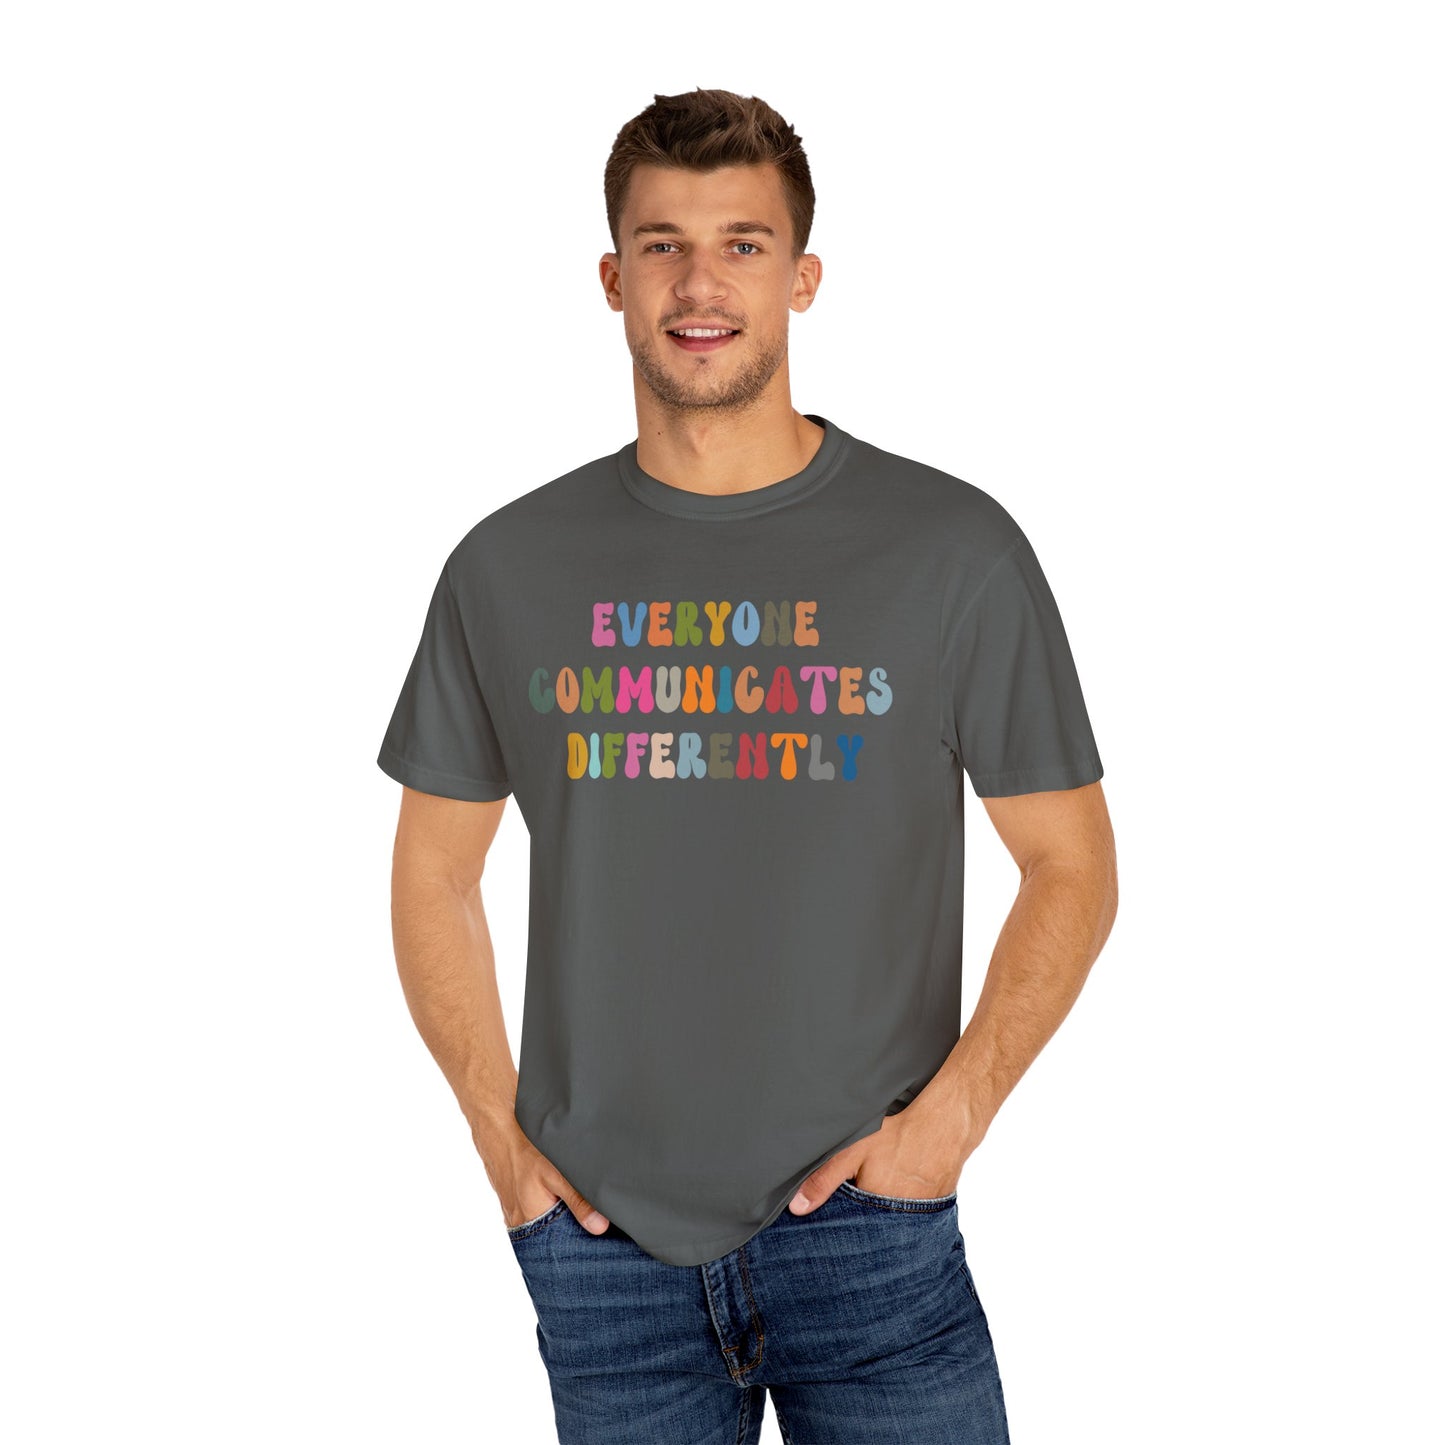 Everyone Communicates Differently Shirt, Special Education Teacher Shirt Inclusive Shirt, Autism Awareness Shirt, ADHD Shirt, CC811